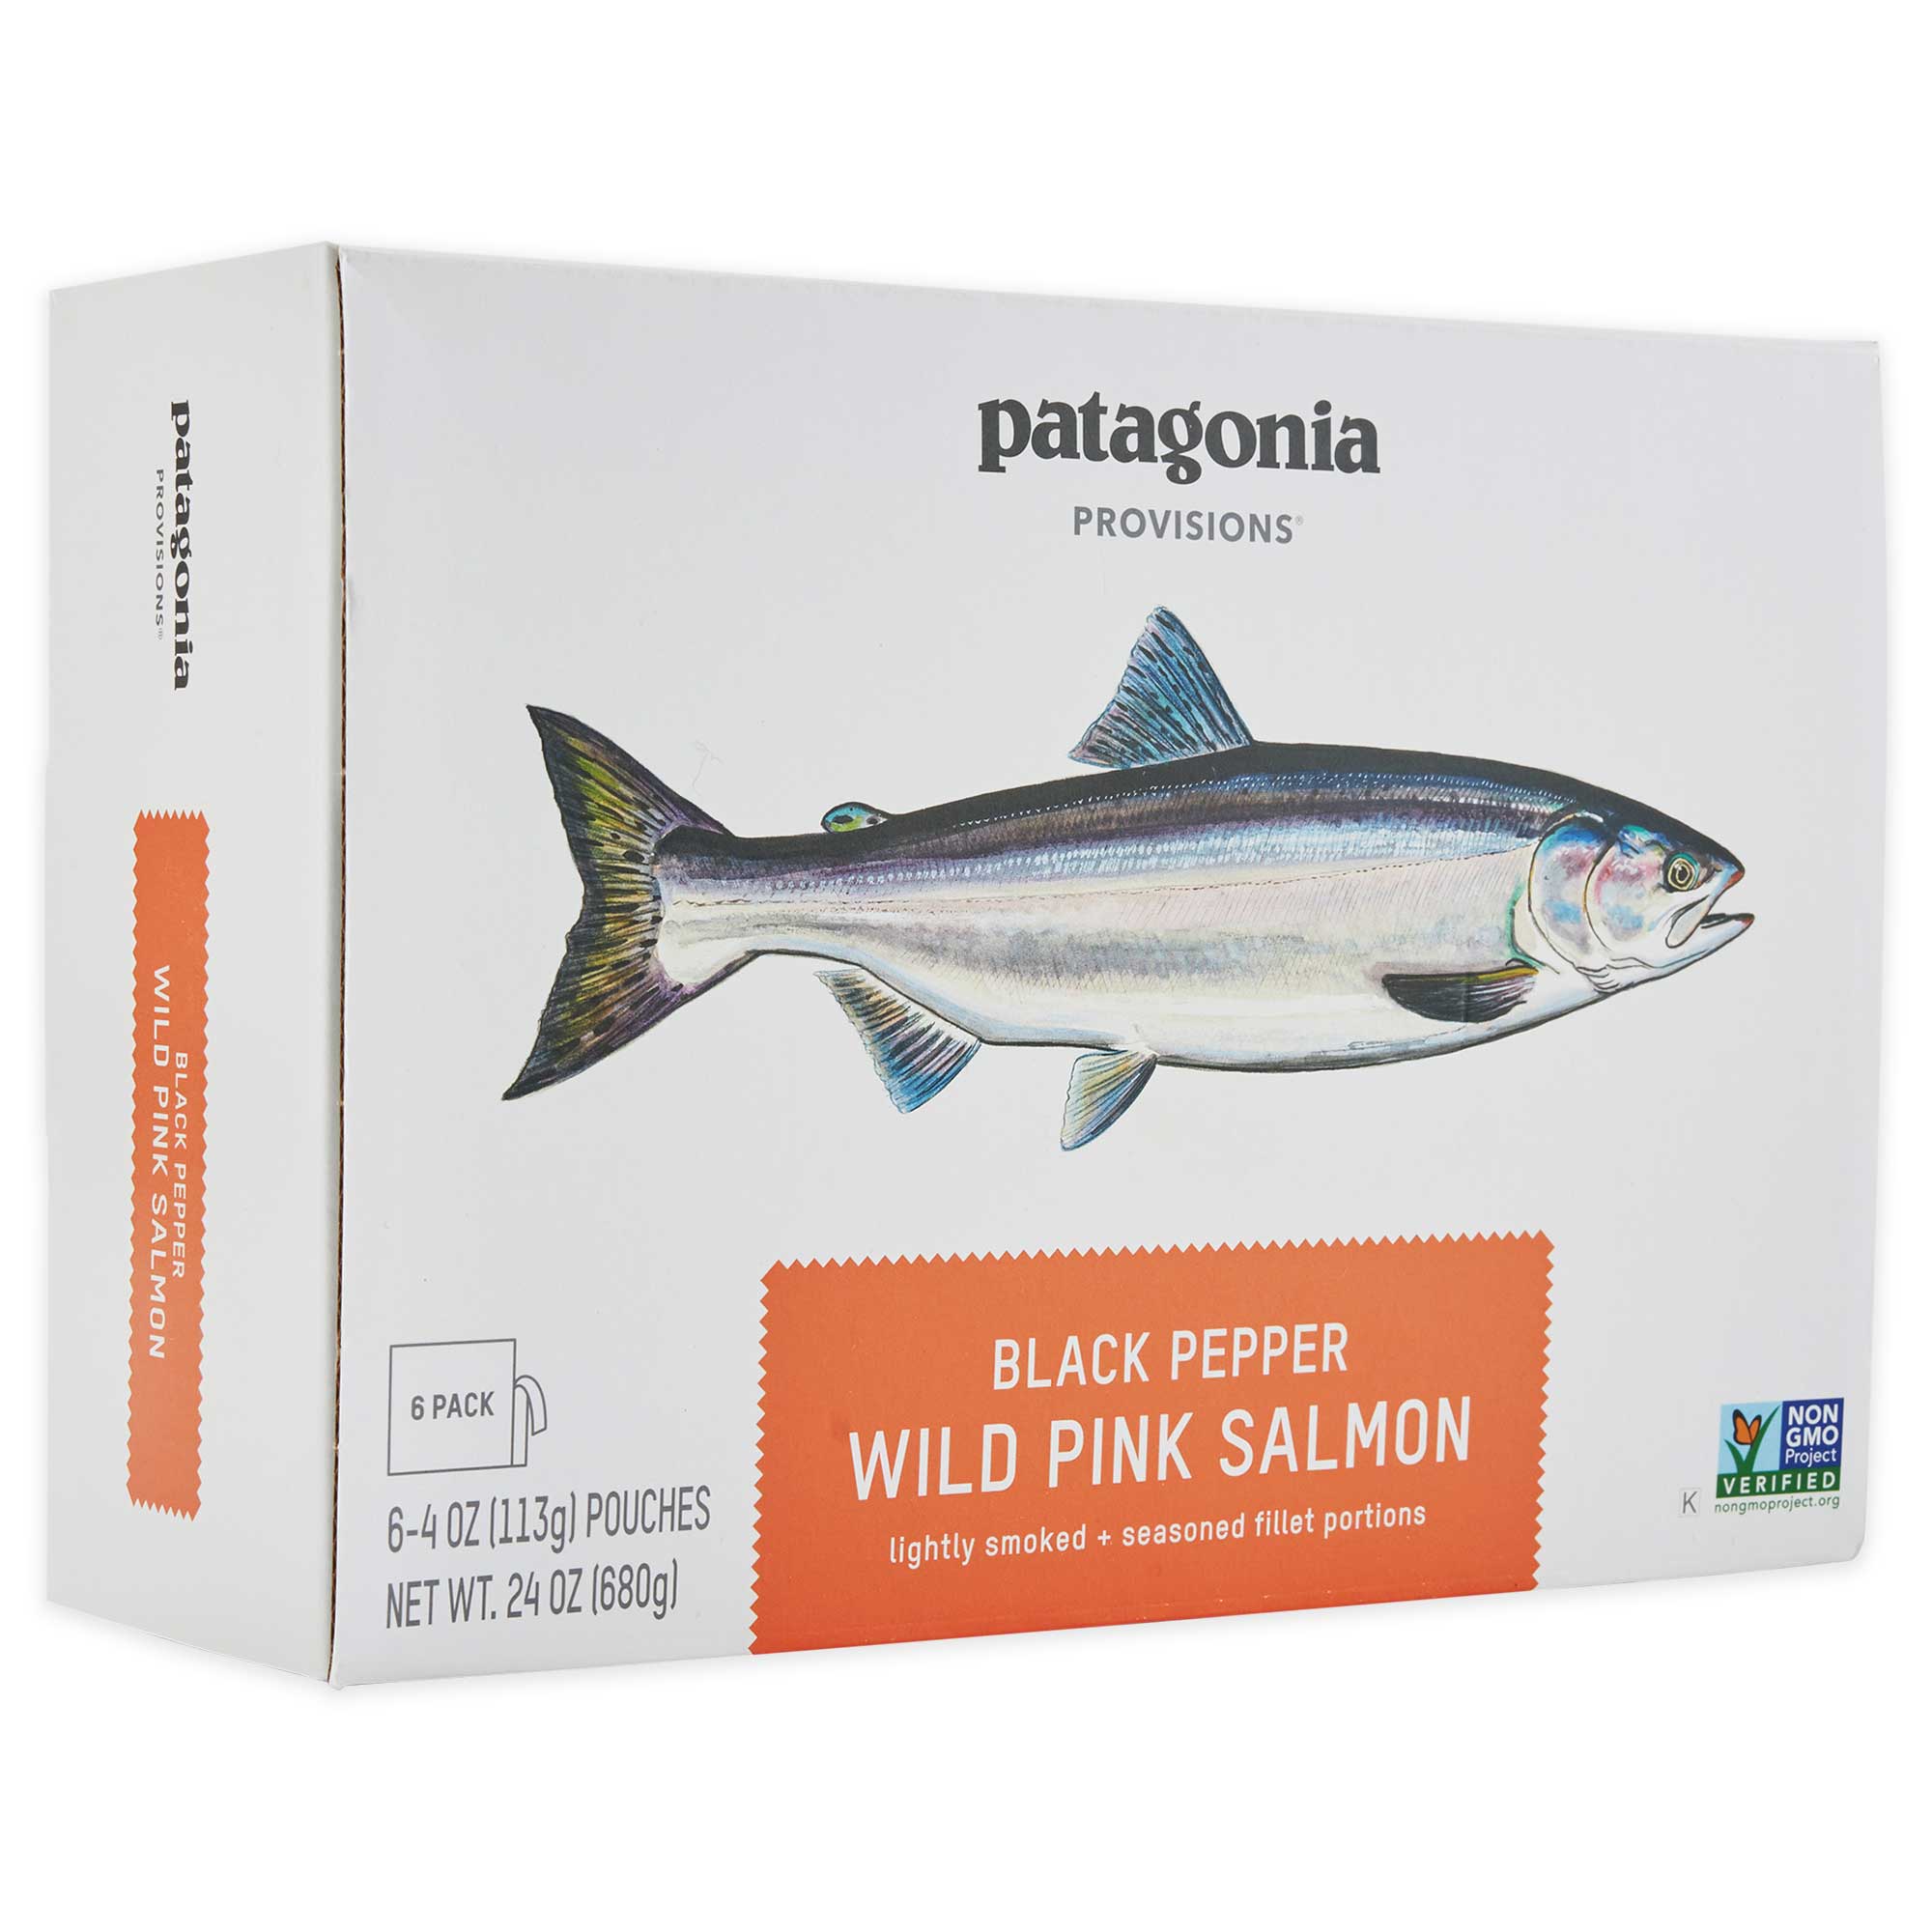 Patagonia Provisions Black Pepper Wild Pink Salmon